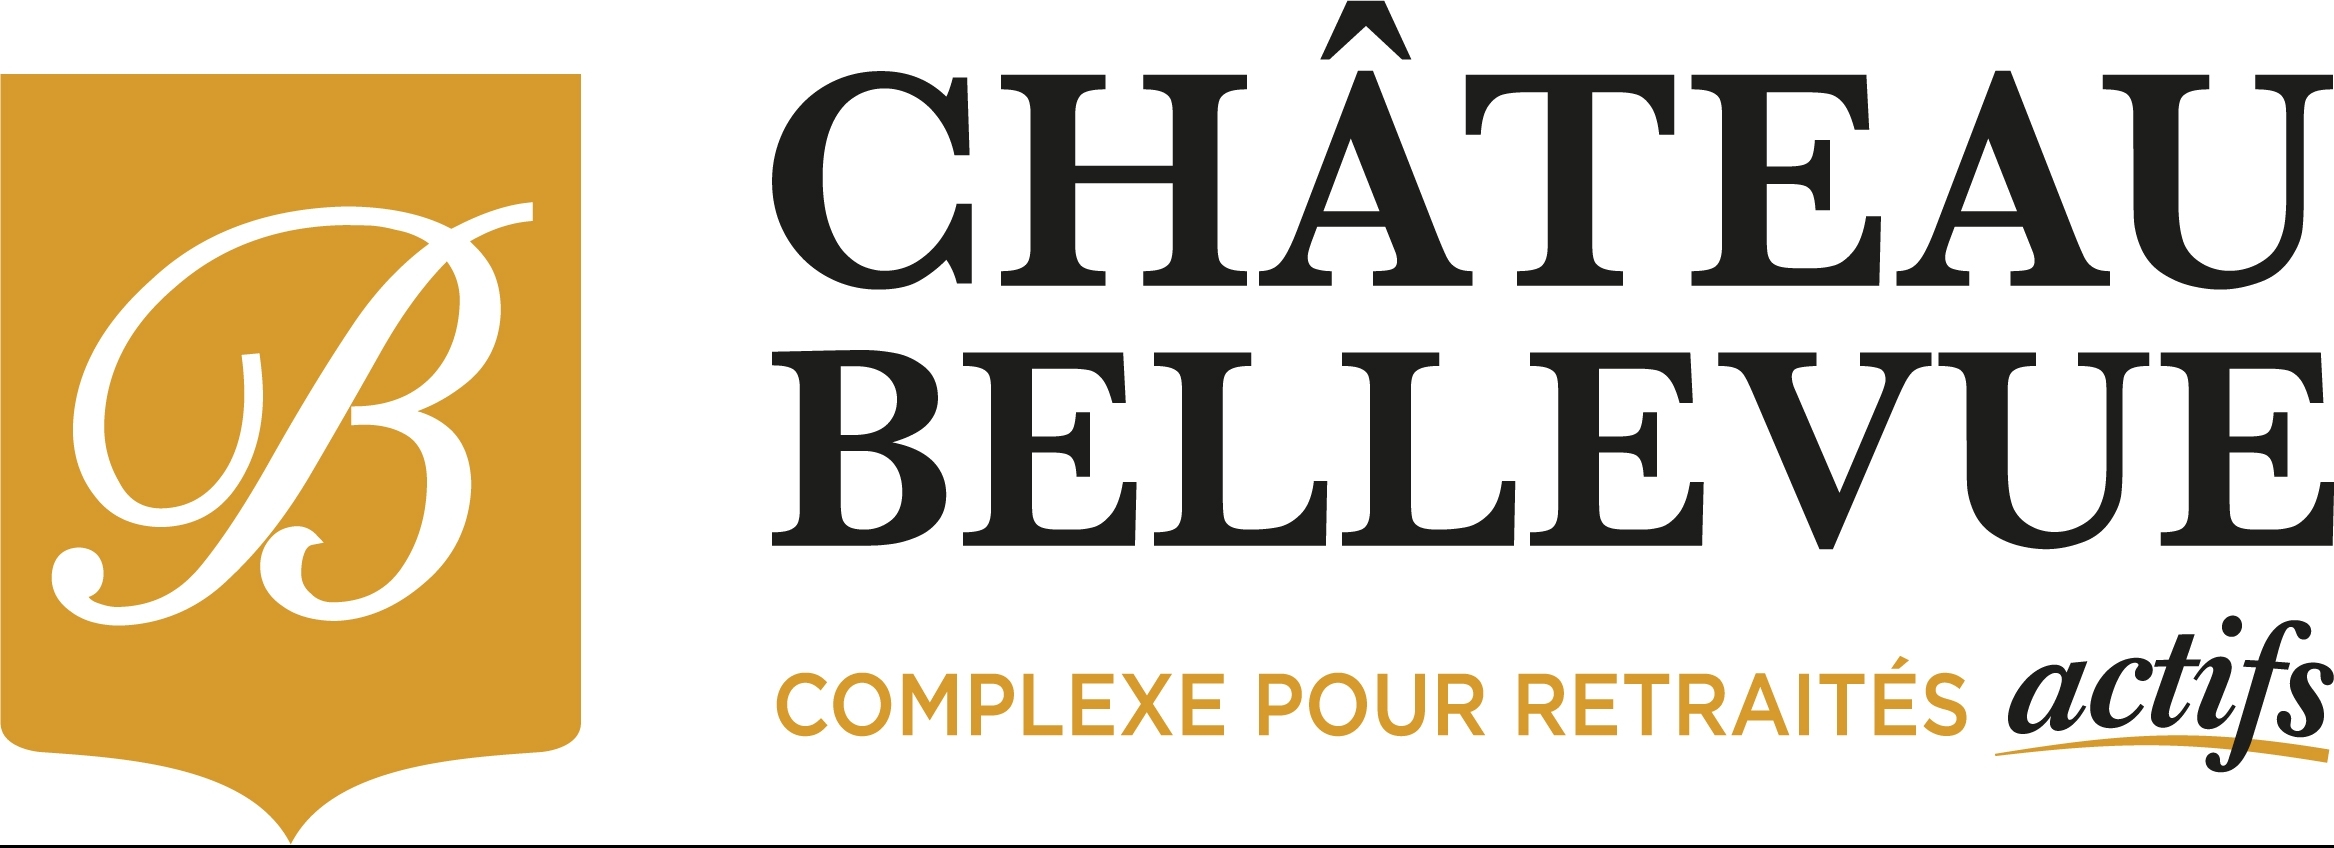 Château Bellevue d'Amqui